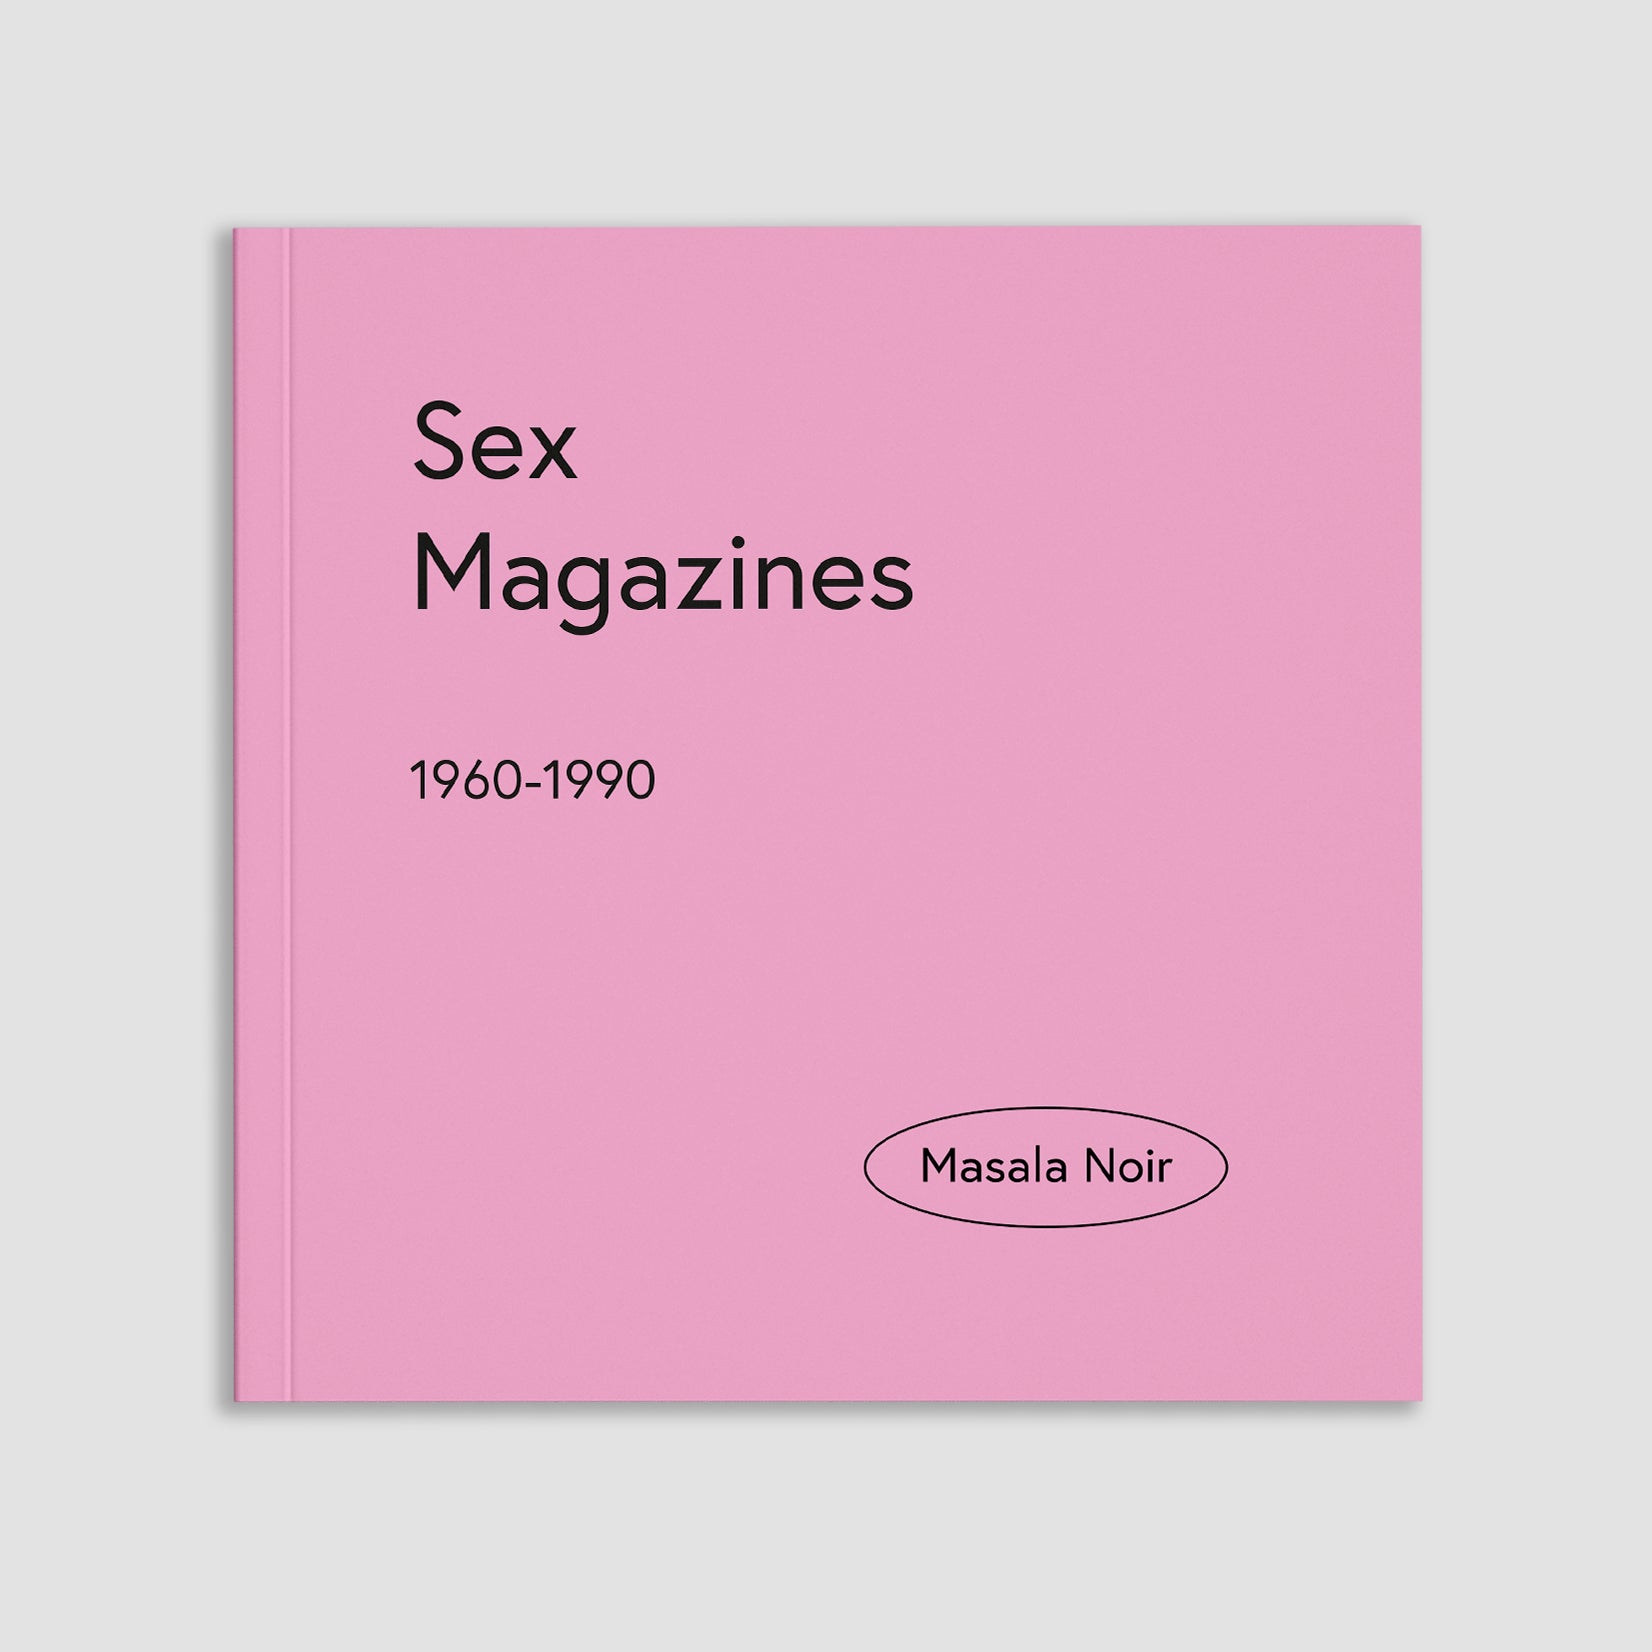 Sex Magazines – Mamama Masala Noir